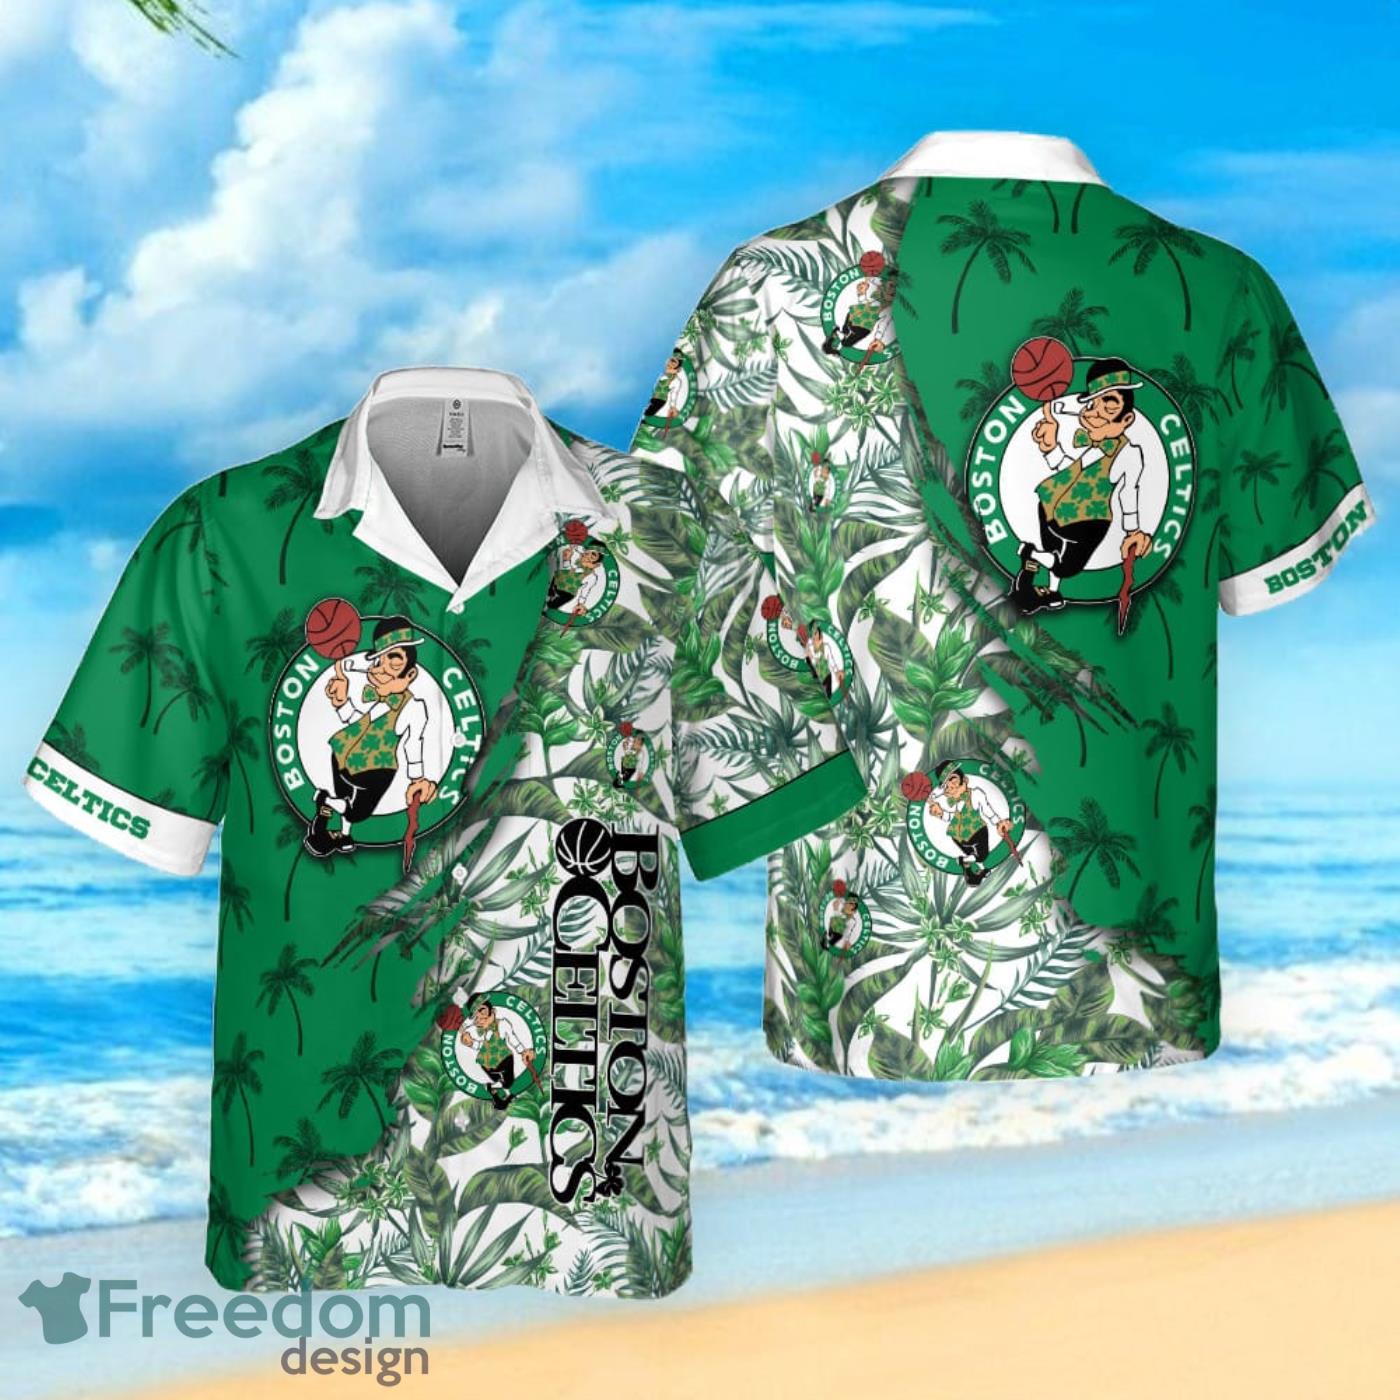 Boston Celtics Hawaiian Shirt Gift For Basketball Players in 2023